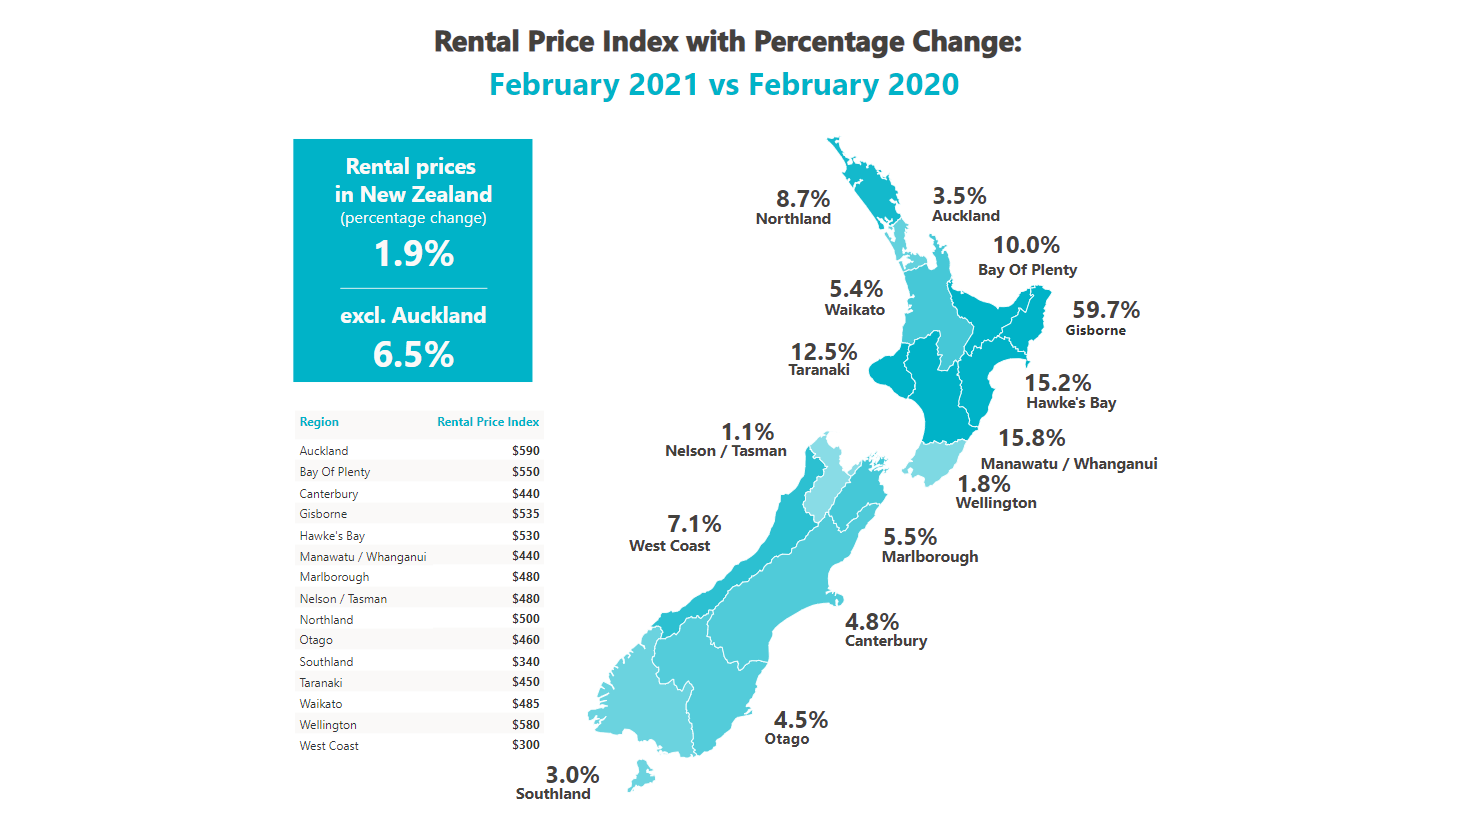 Rental price index with percentage change: Feb 2020 vs Feb 2021